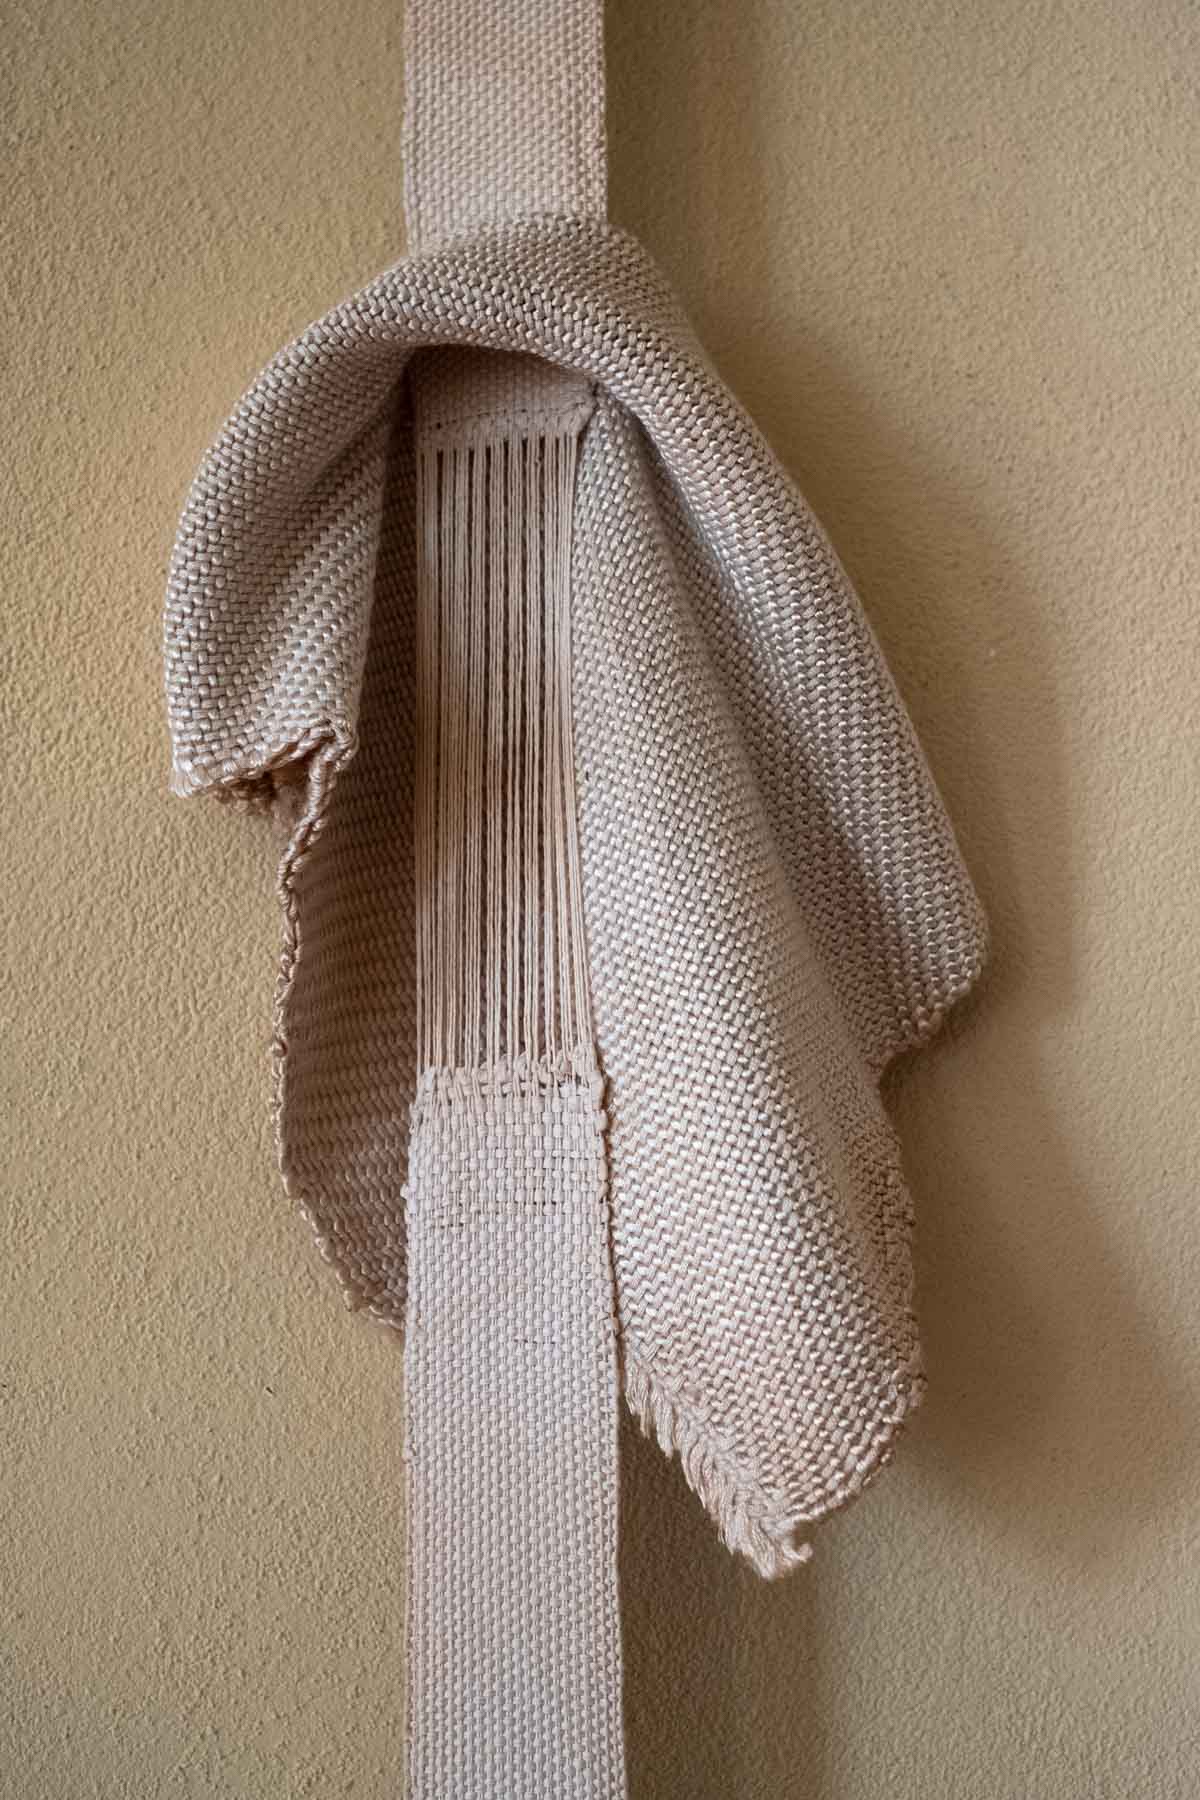 La Resa Di Multipli Drappi (2021) 2,34x89x16 cm Paper yarn, bamboo fiber, banana fiber